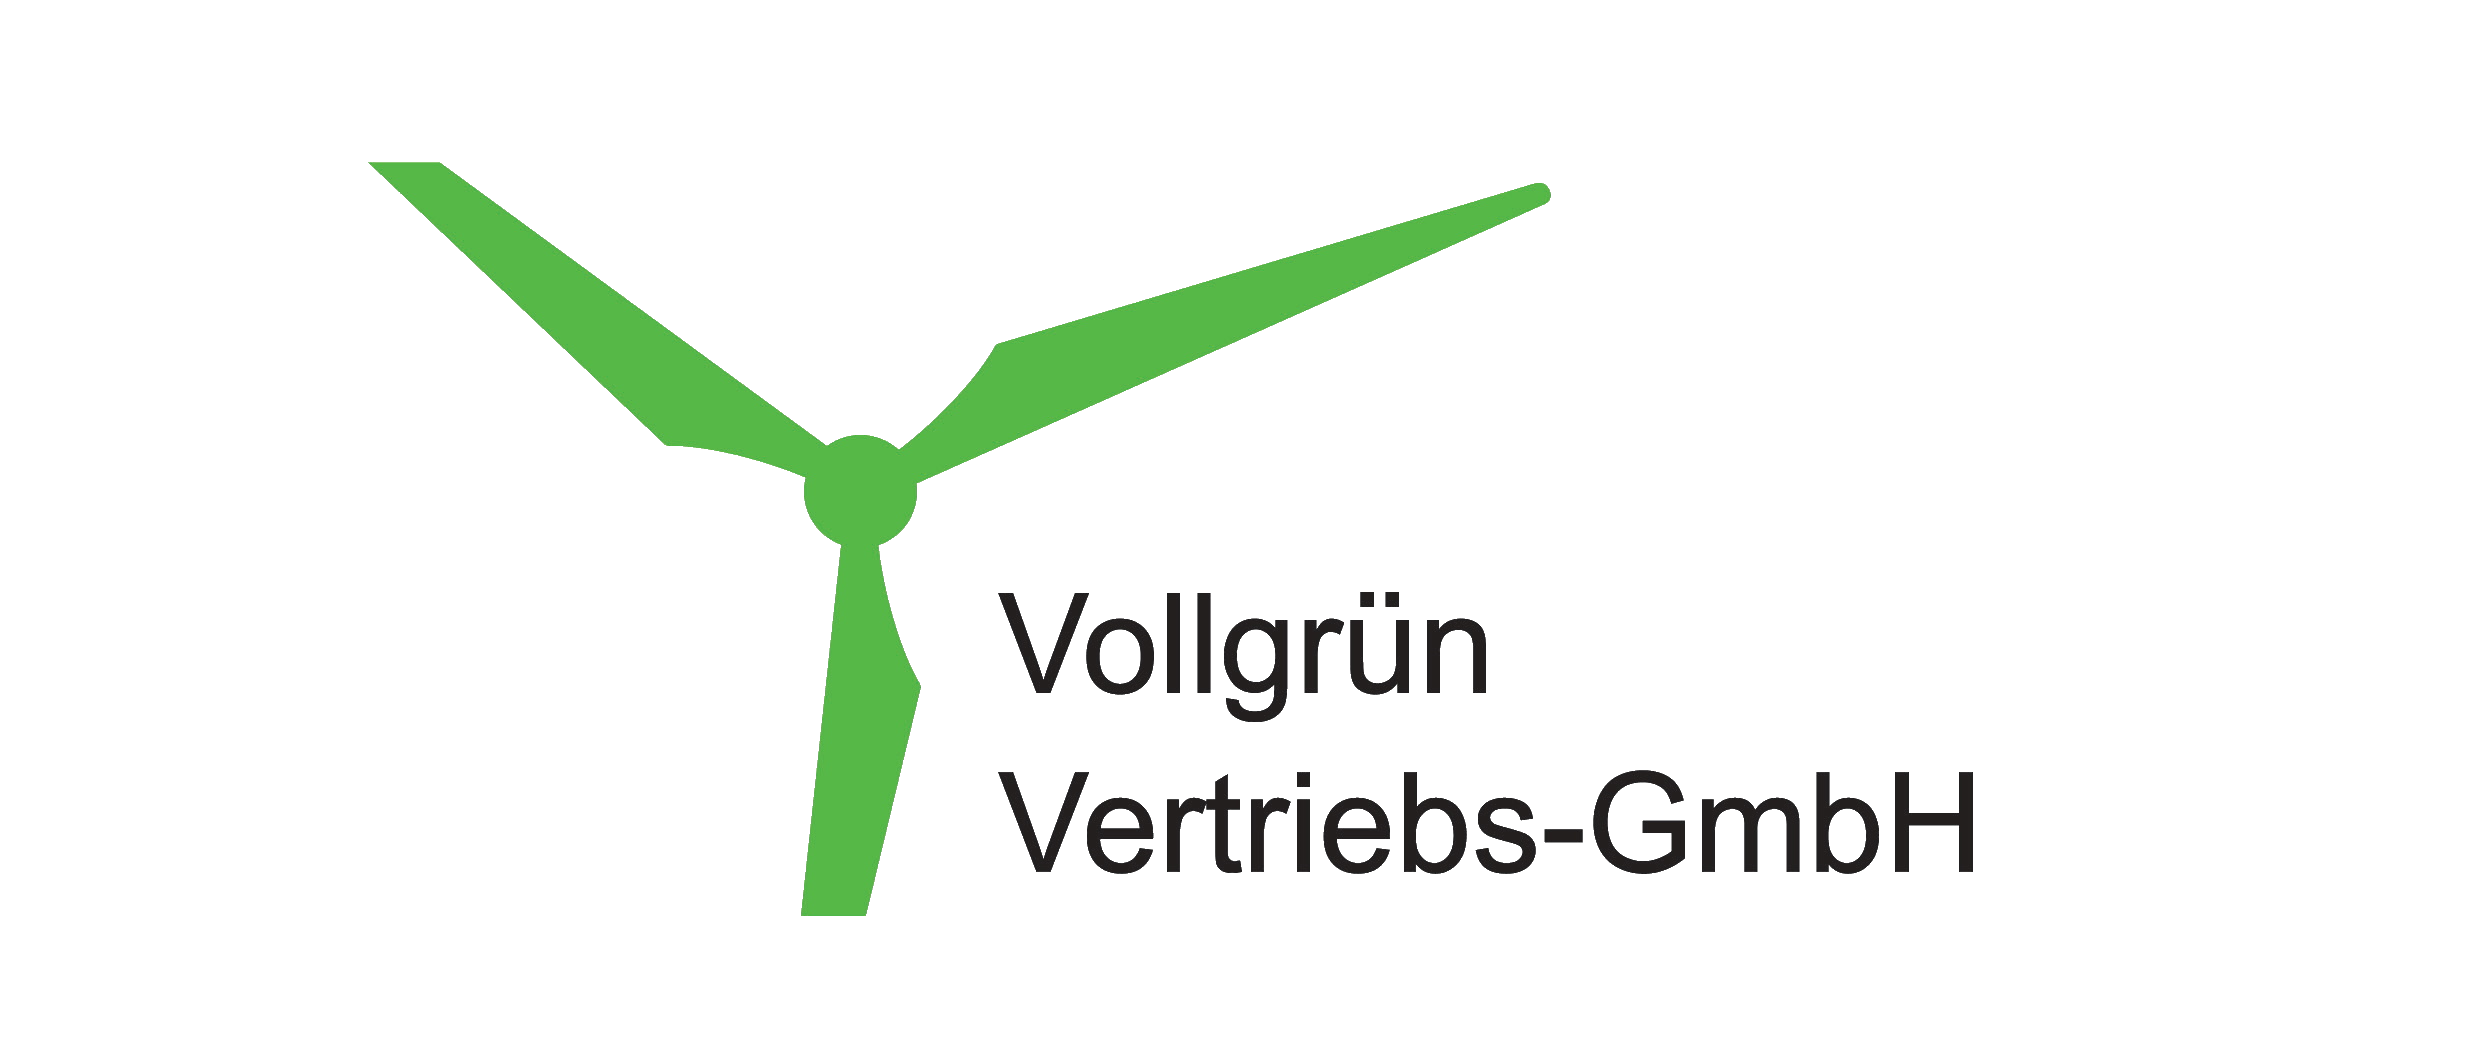 Logo Vollgruen Vertriebs-GmbH